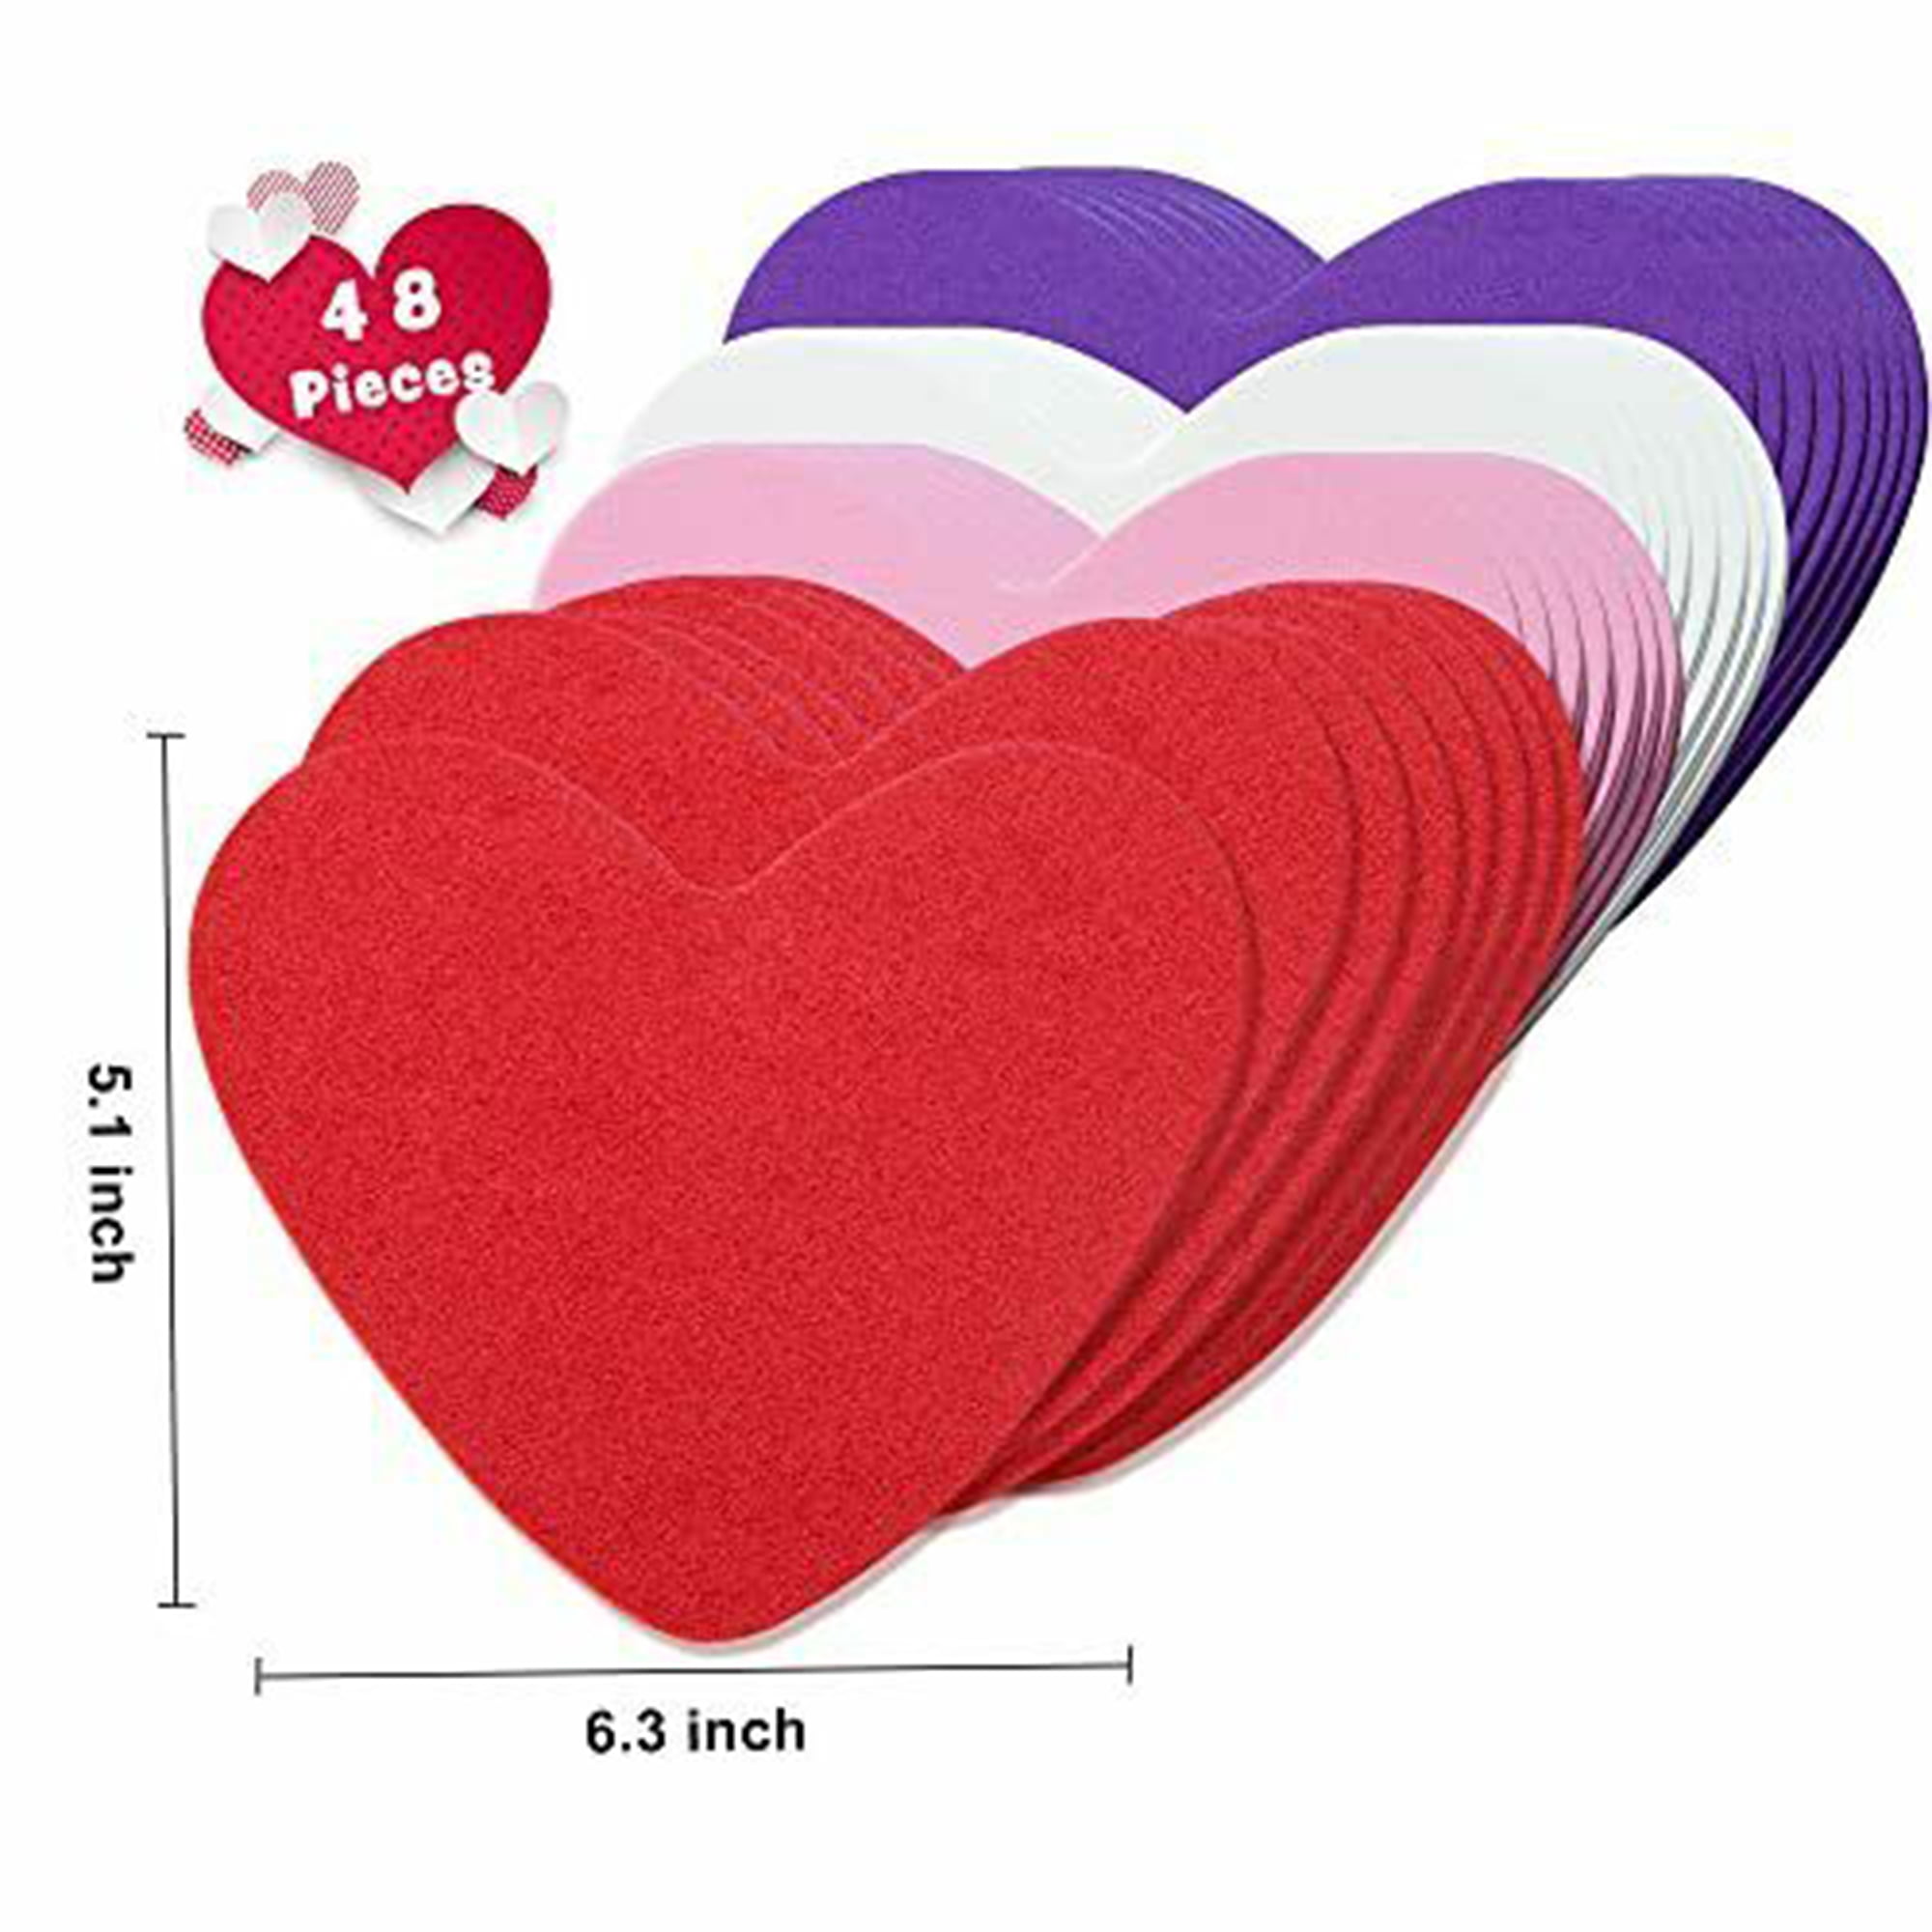 U-PTYTM 520 Pcs Valentine's Day Foam Heart Craft Set Includes 20 Pcs Colorful-Foam-Hearts, 300 Pcs Self-Adhesive Heart Foam Stickers and 200 Pcs